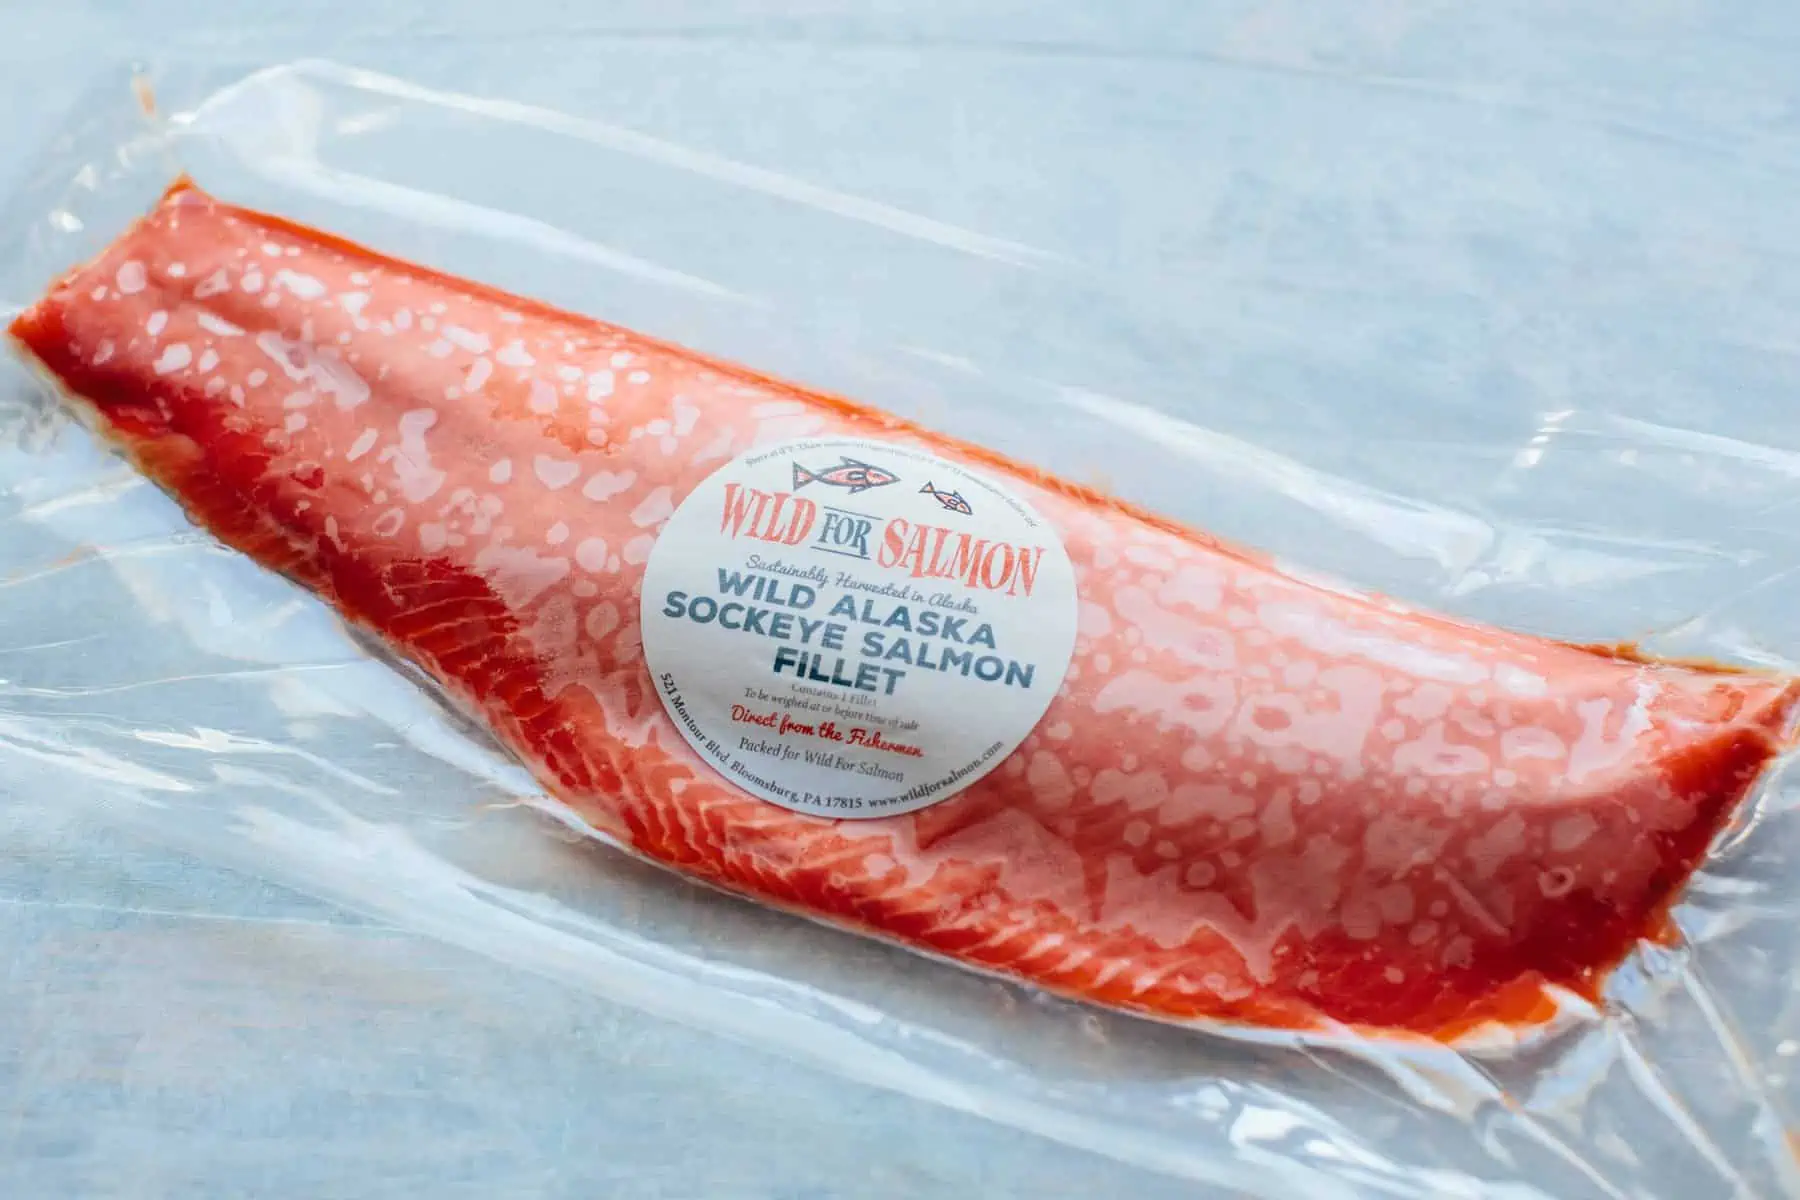 Frozen wild salmon in a vacuum seal